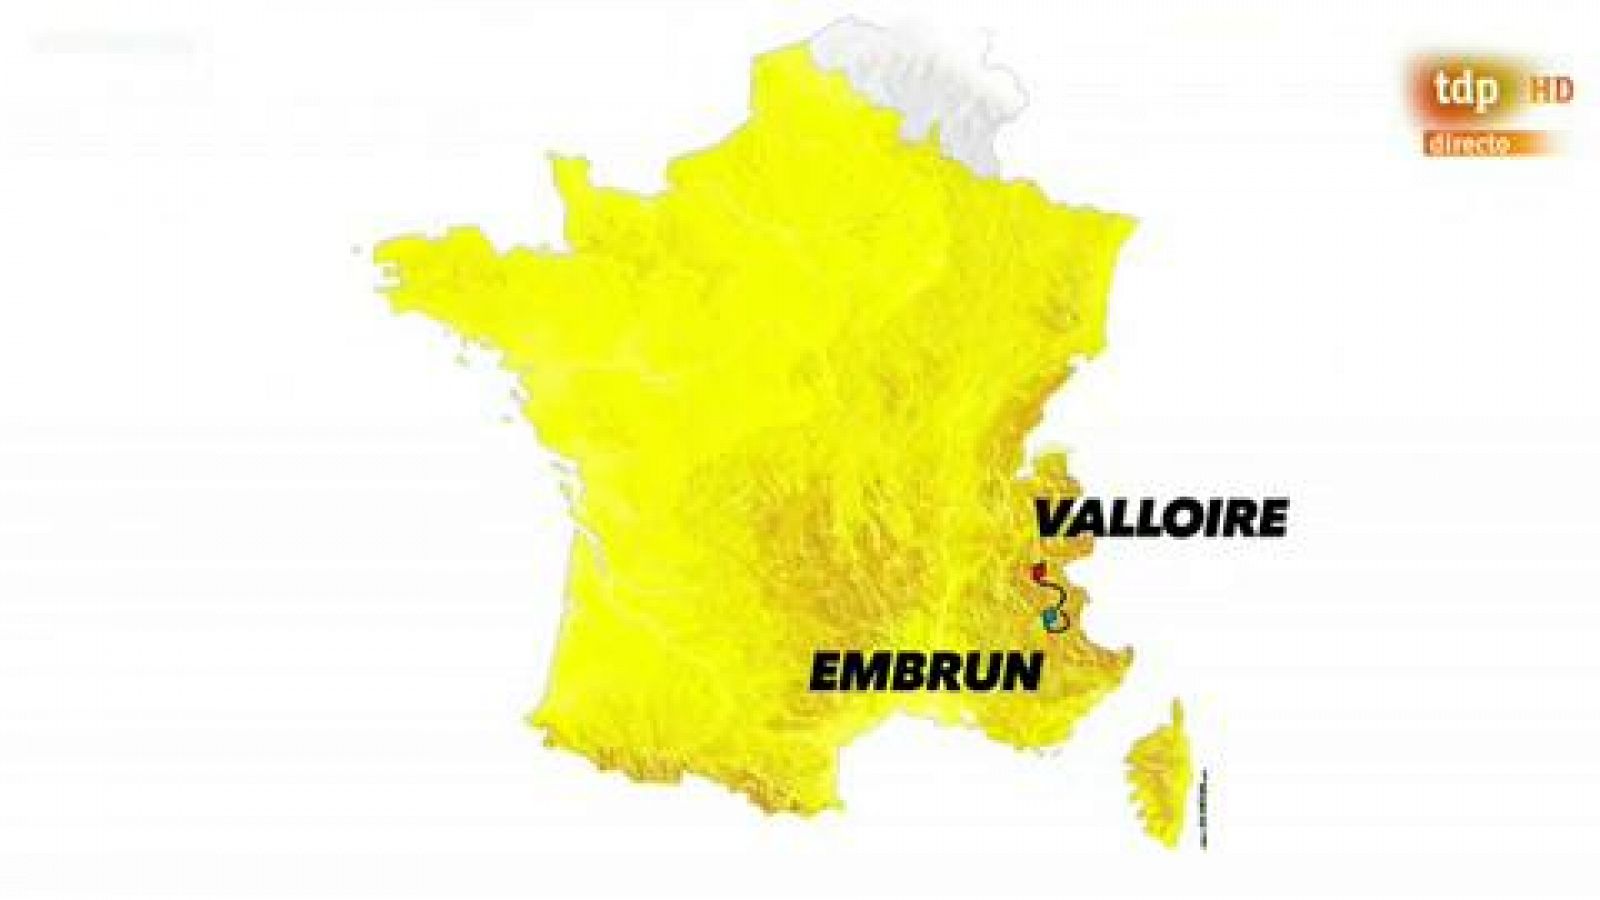 Tour 2019: La etapa 18 abre la entrada a los Alpes (Embrun - Valloire)